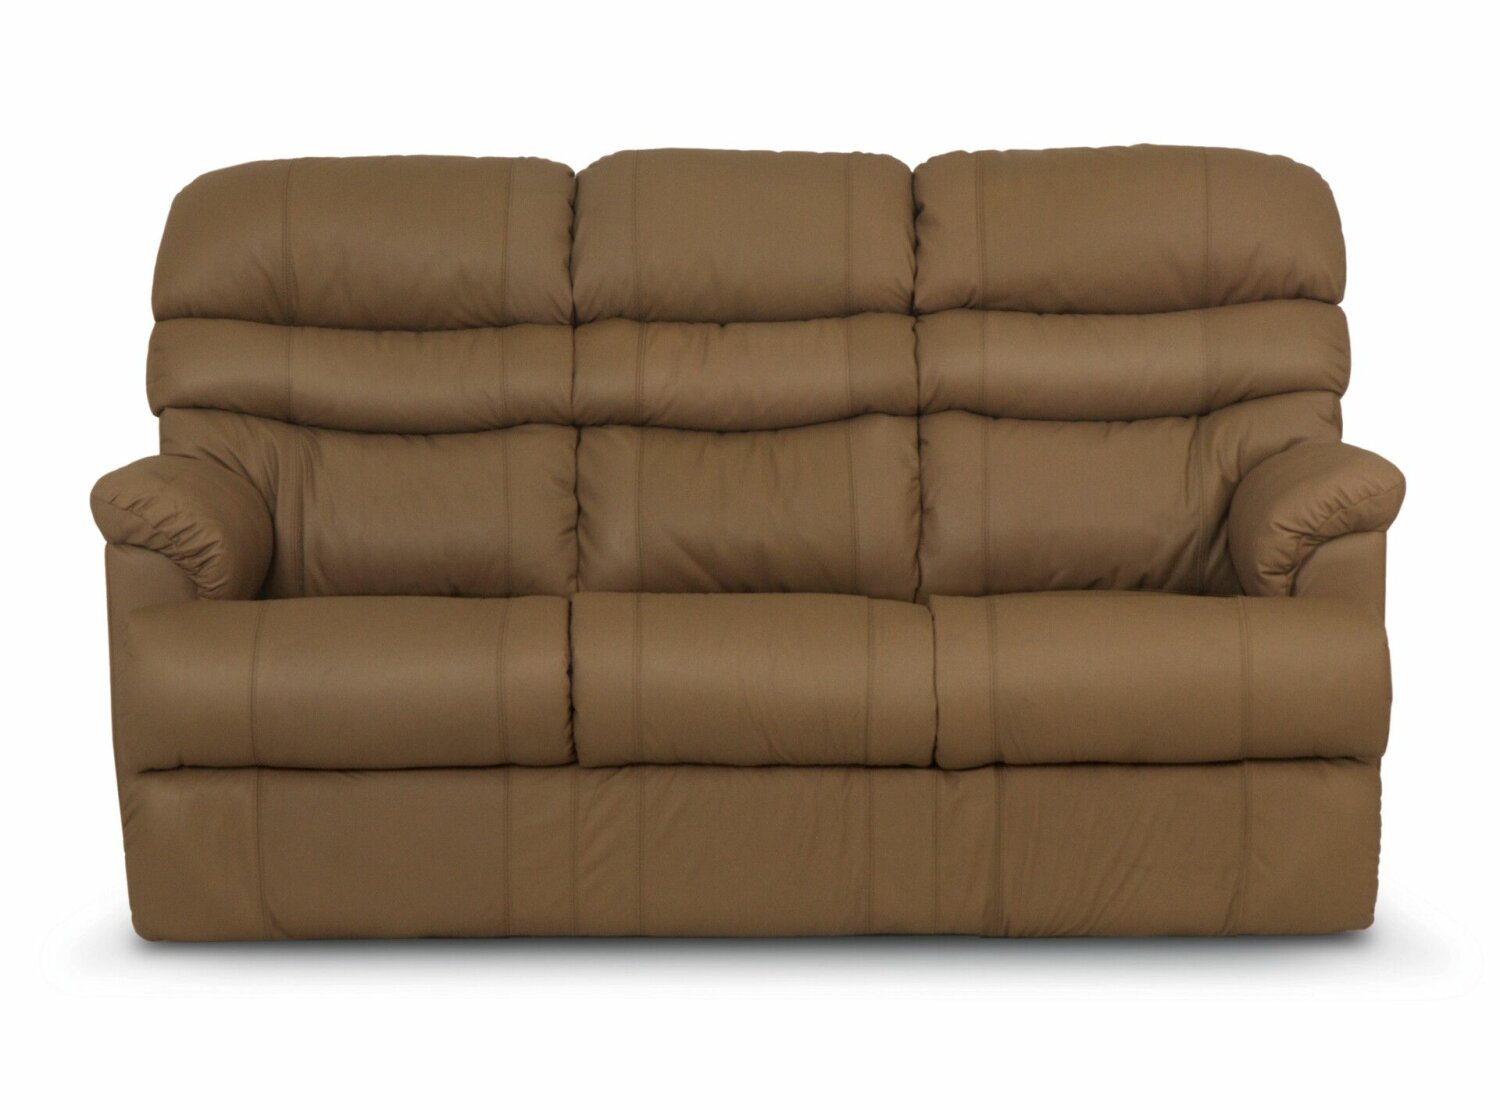 Cortland La-Z-Boy 3 Seater Sofa